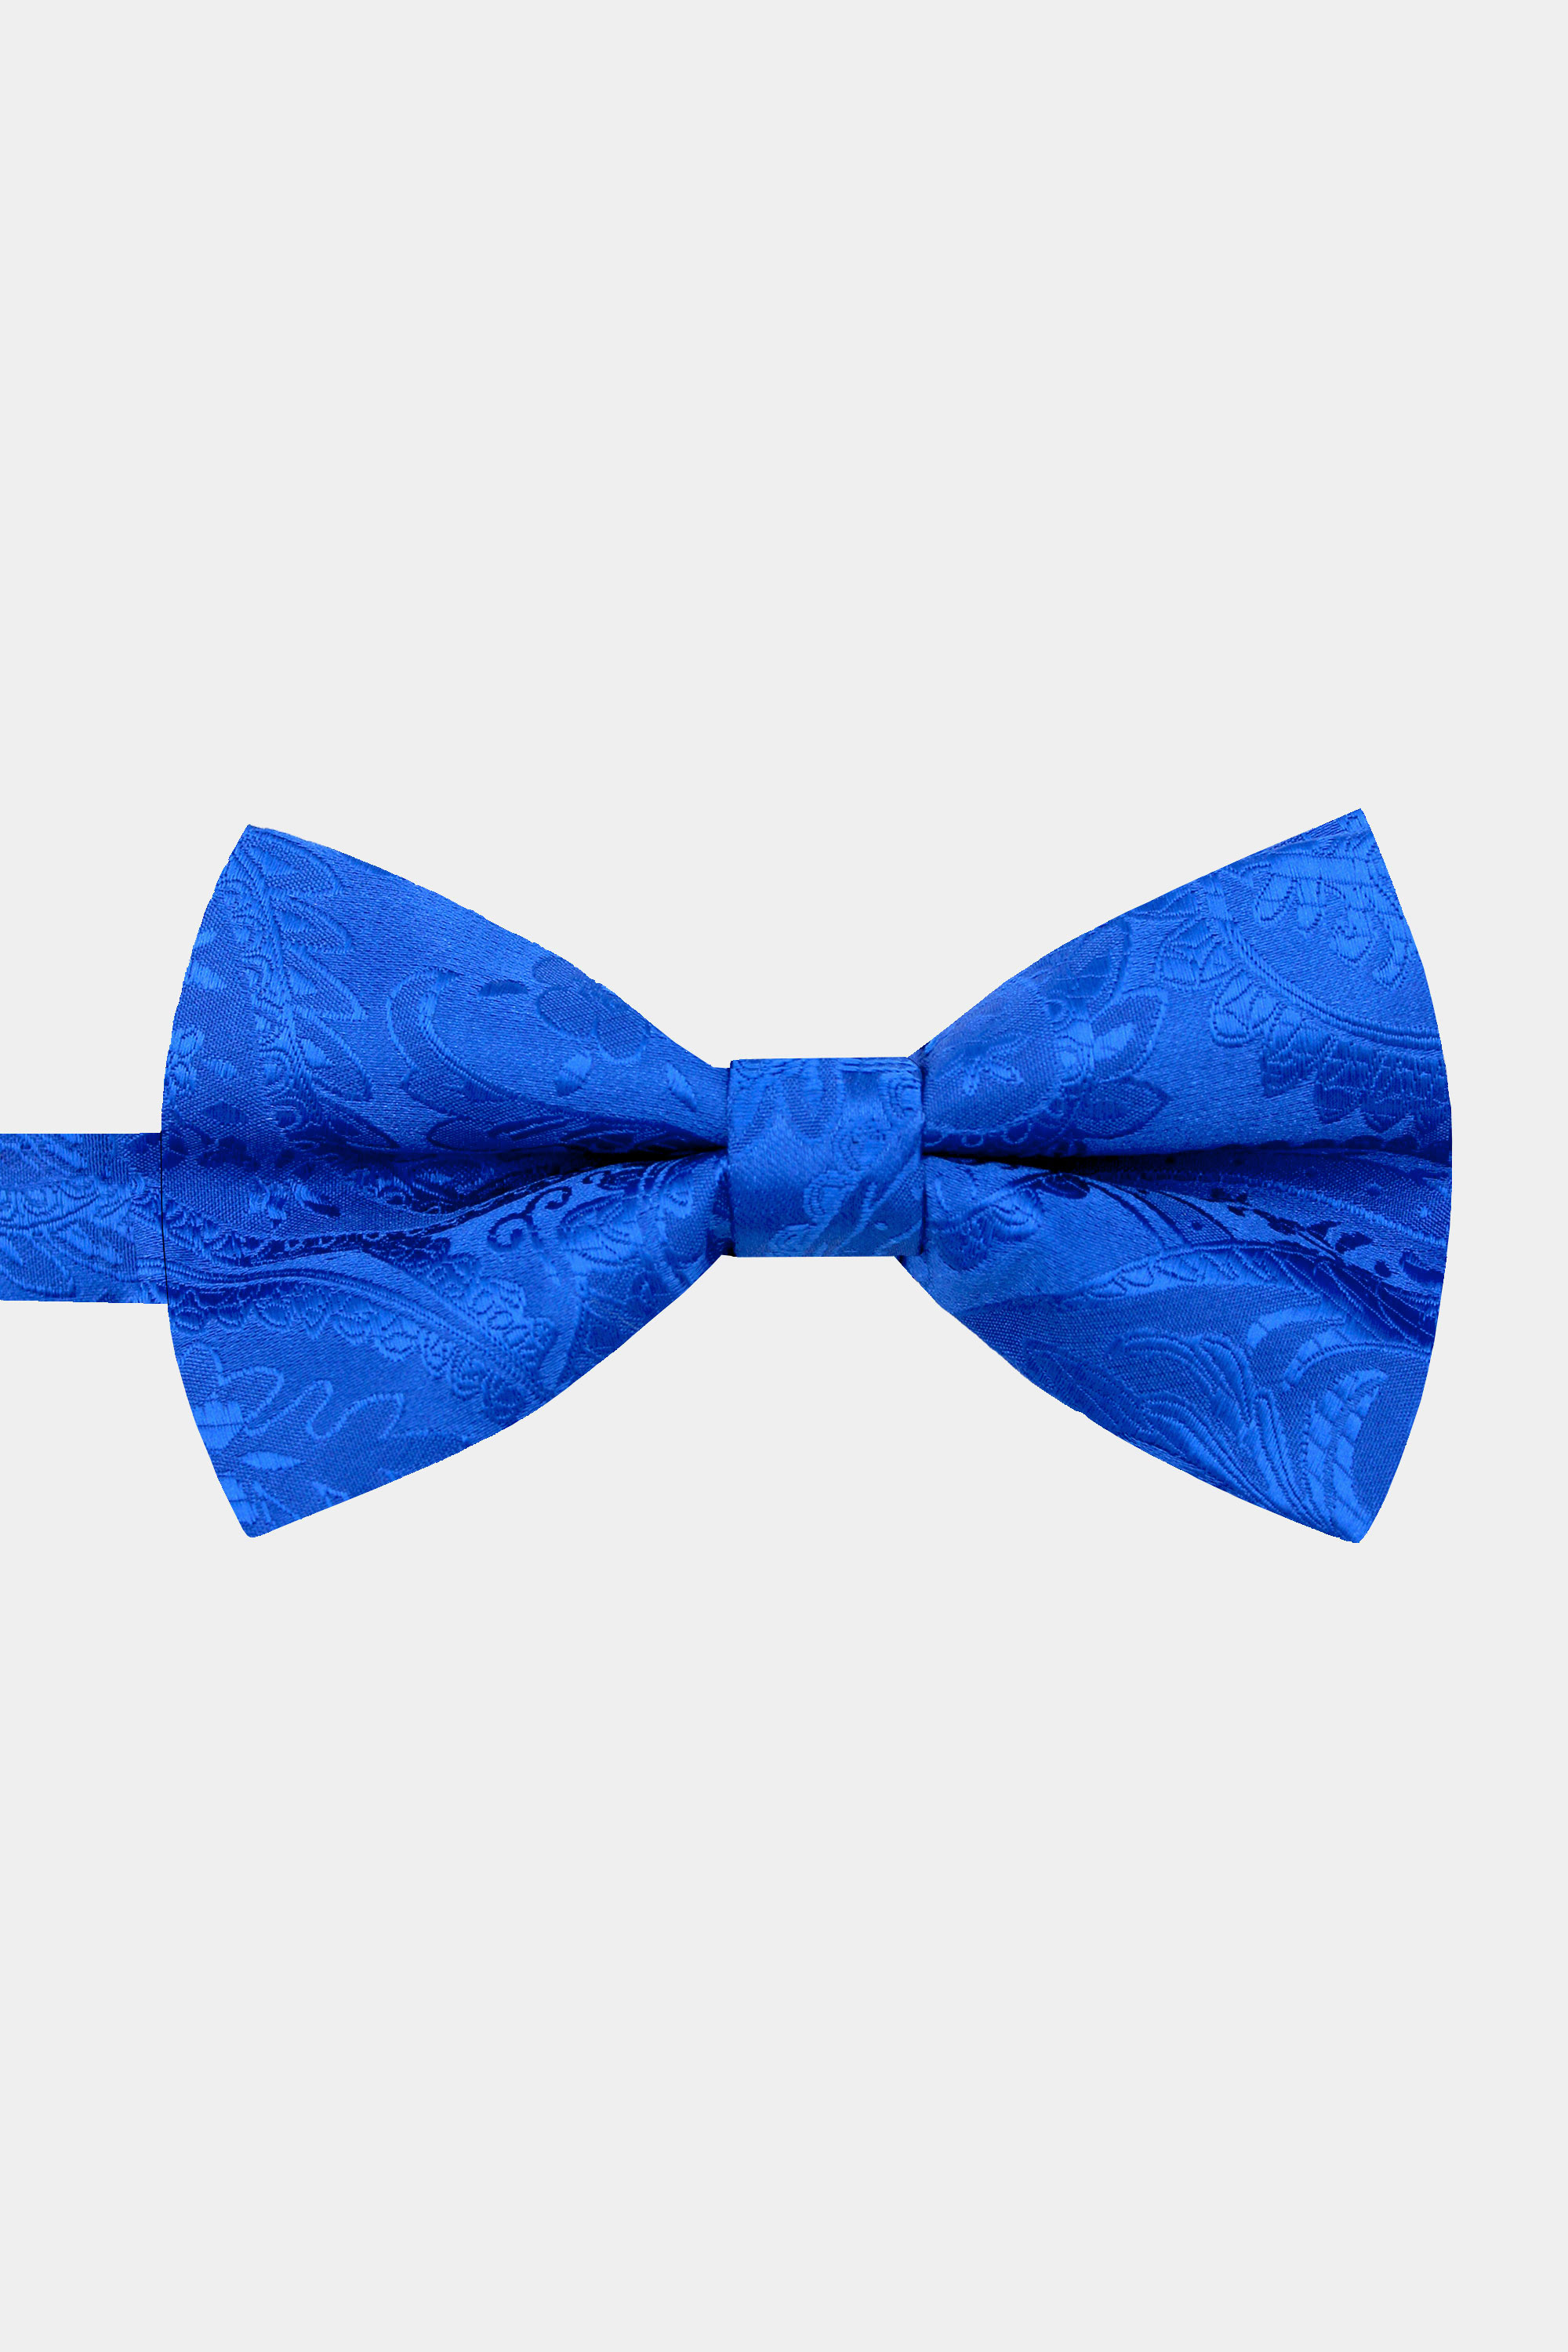 Paisley-Royal-Blue-Bow-Tie-from-Gentlemansguru.com